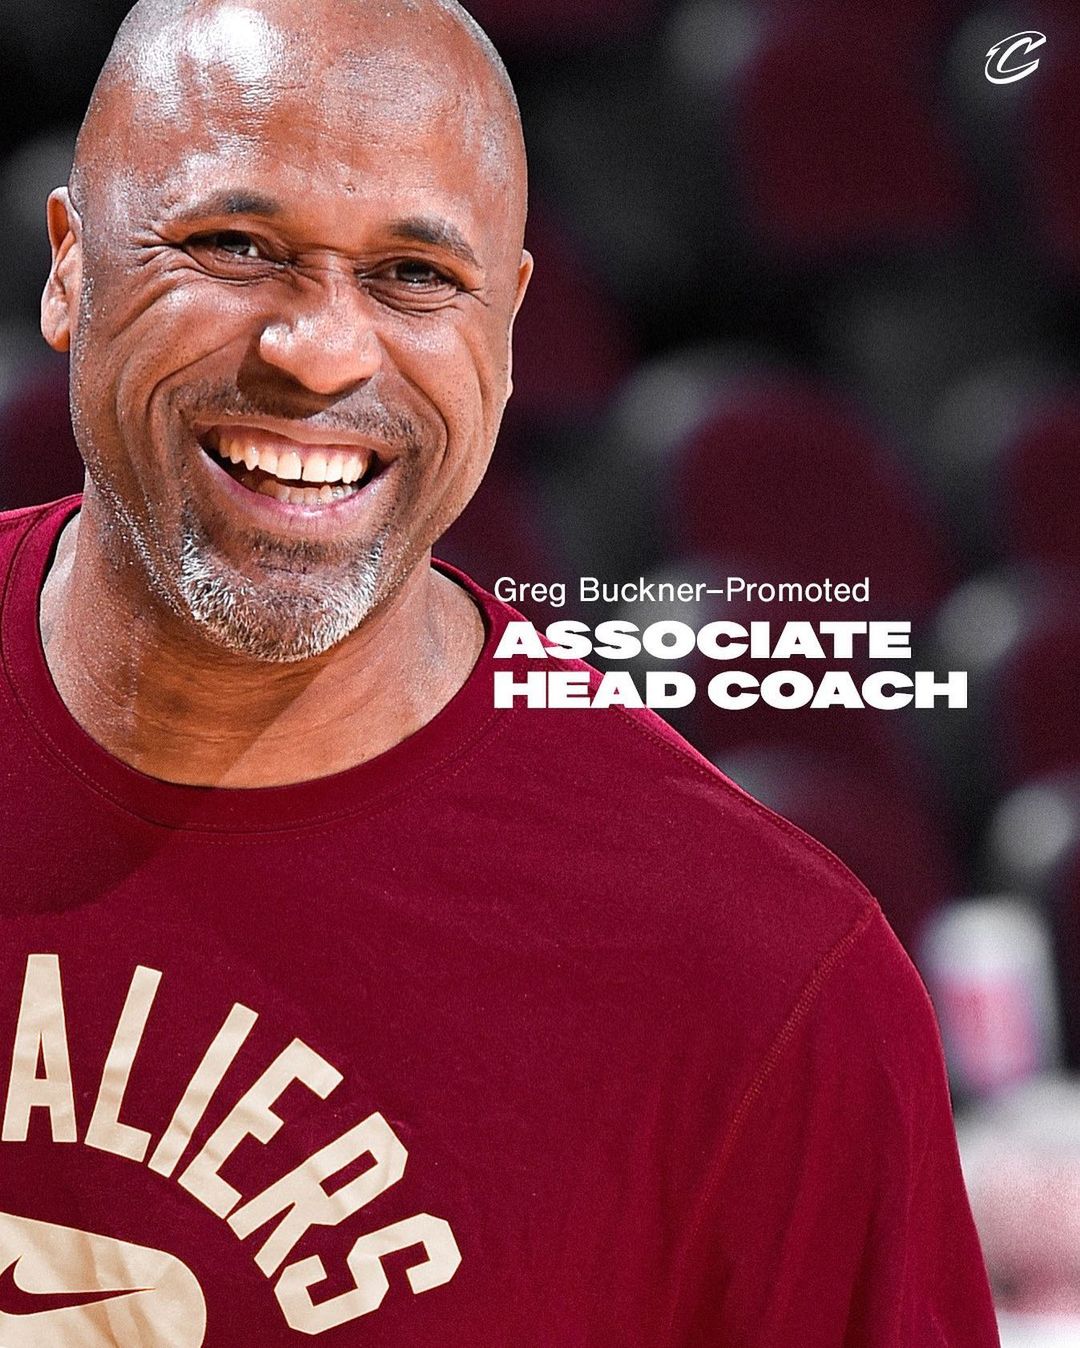 OFFICIAL: #Cavs promote Greg Buckner to Associate Head Coach....